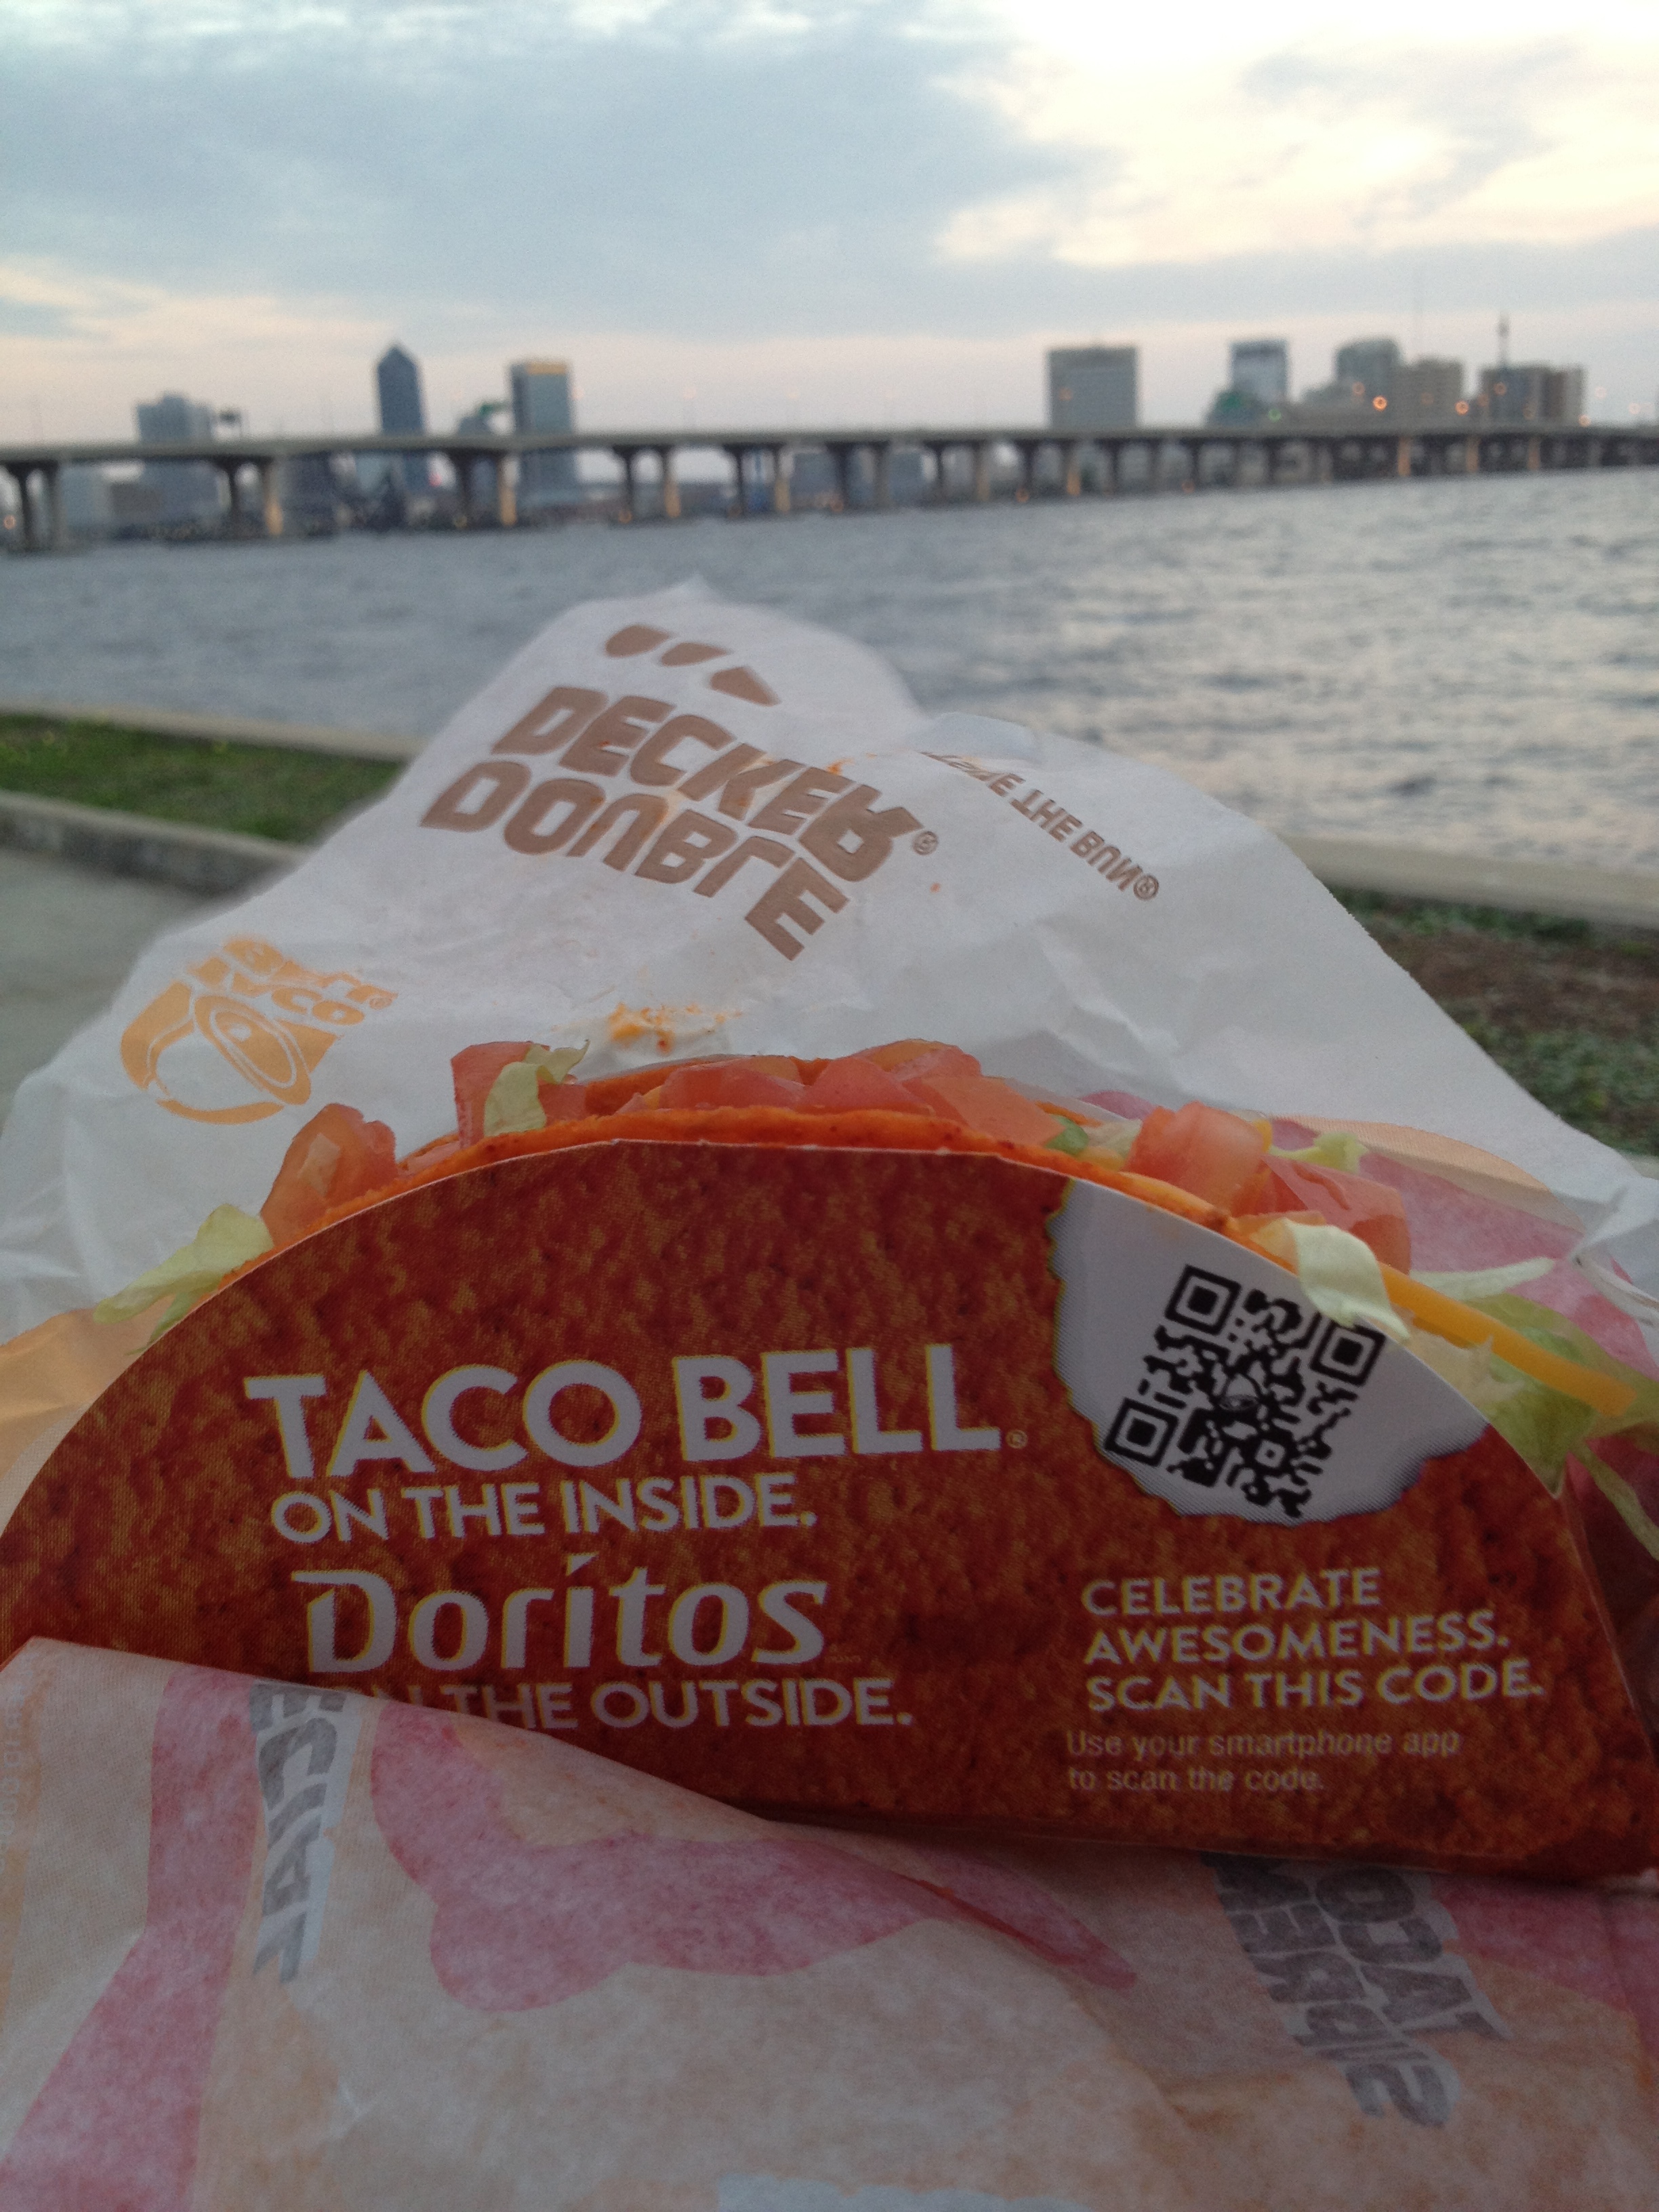 Doritos Locos Tacos from Taco Bell